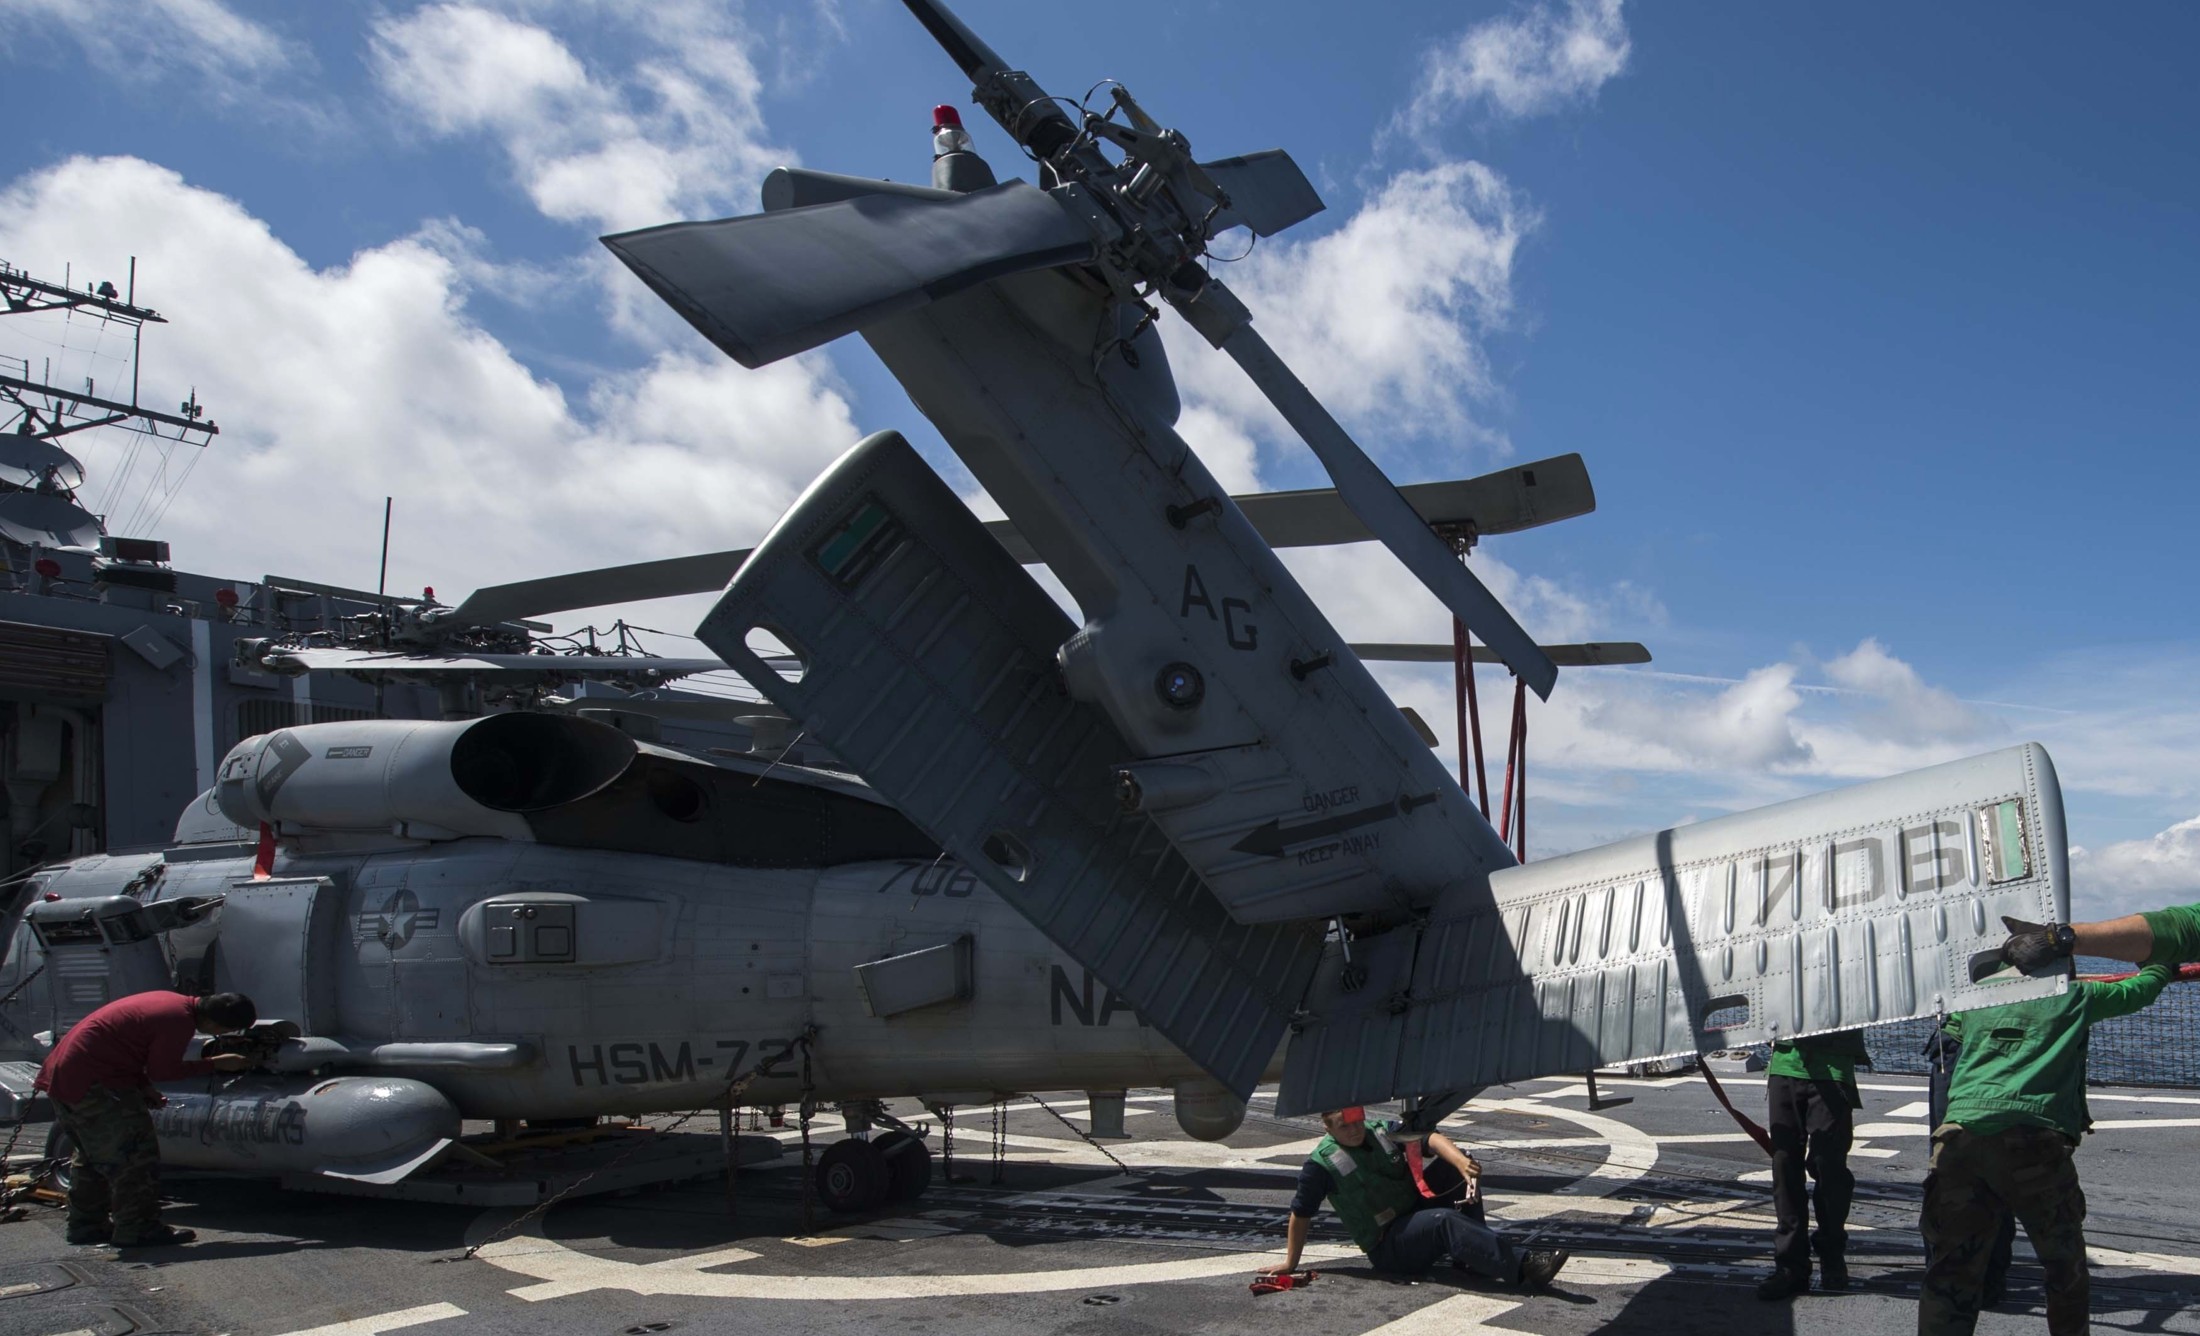 hsm-72 proud warriors helicopter maritime strike squadron us navy mh-60r seahawk 2014 31 uss oscar austin ddg-79